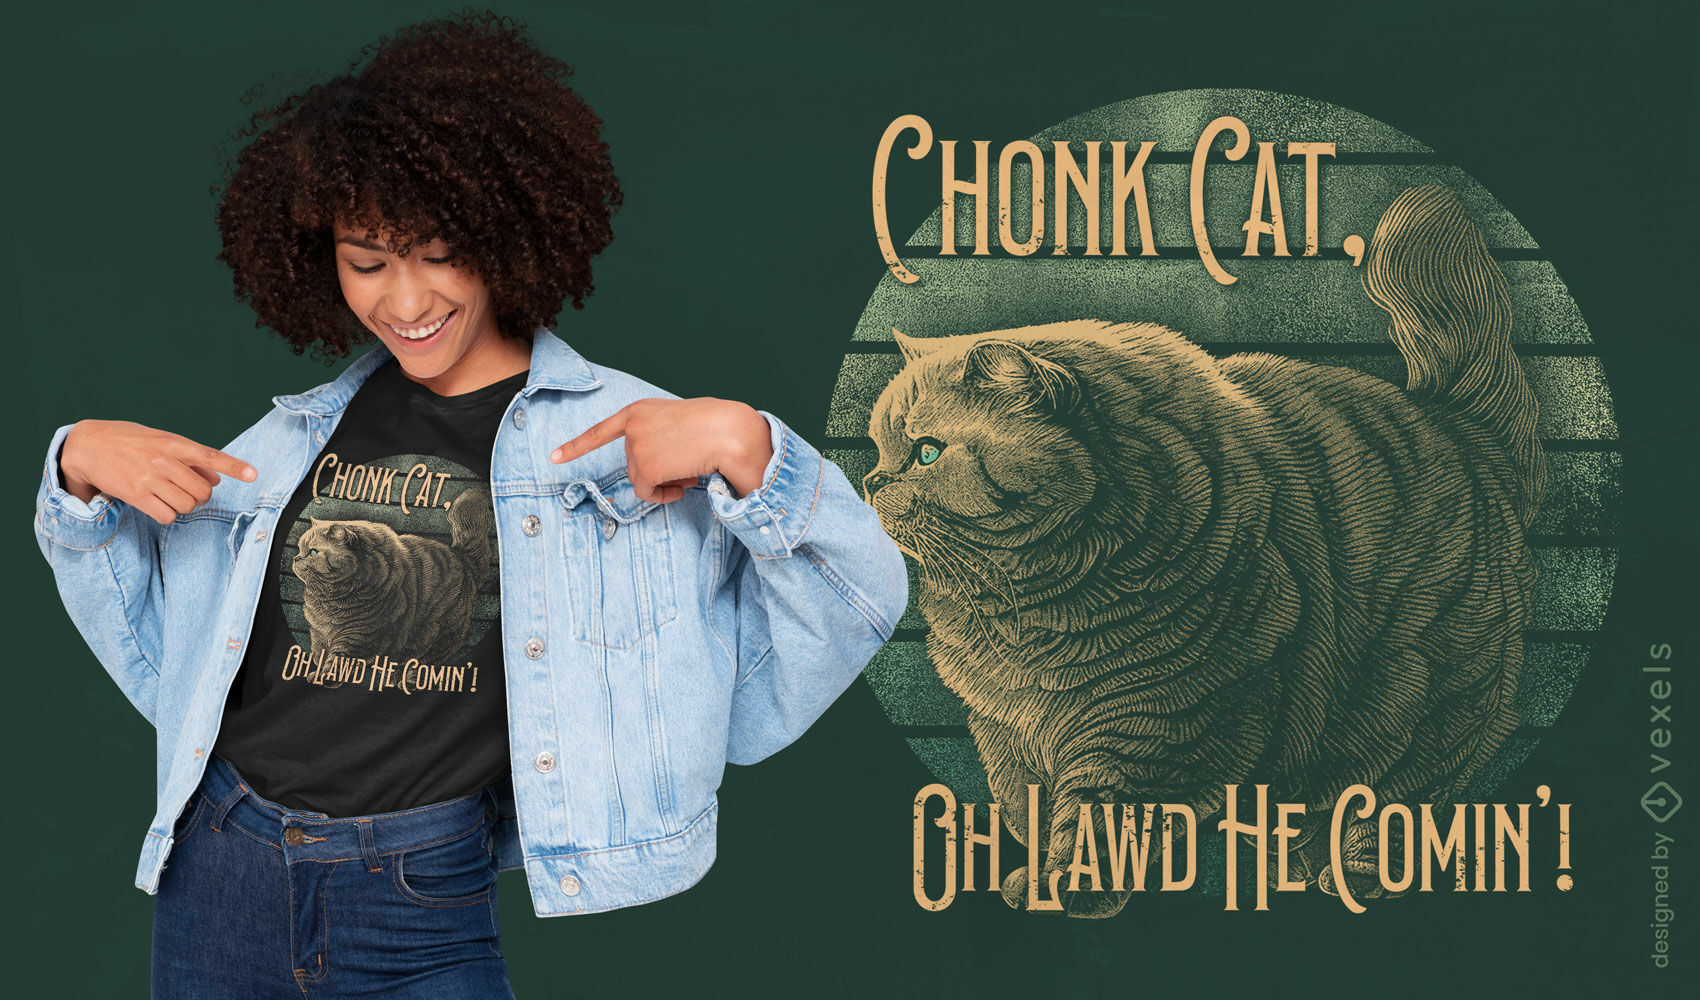 Chonk cat t-shirt design